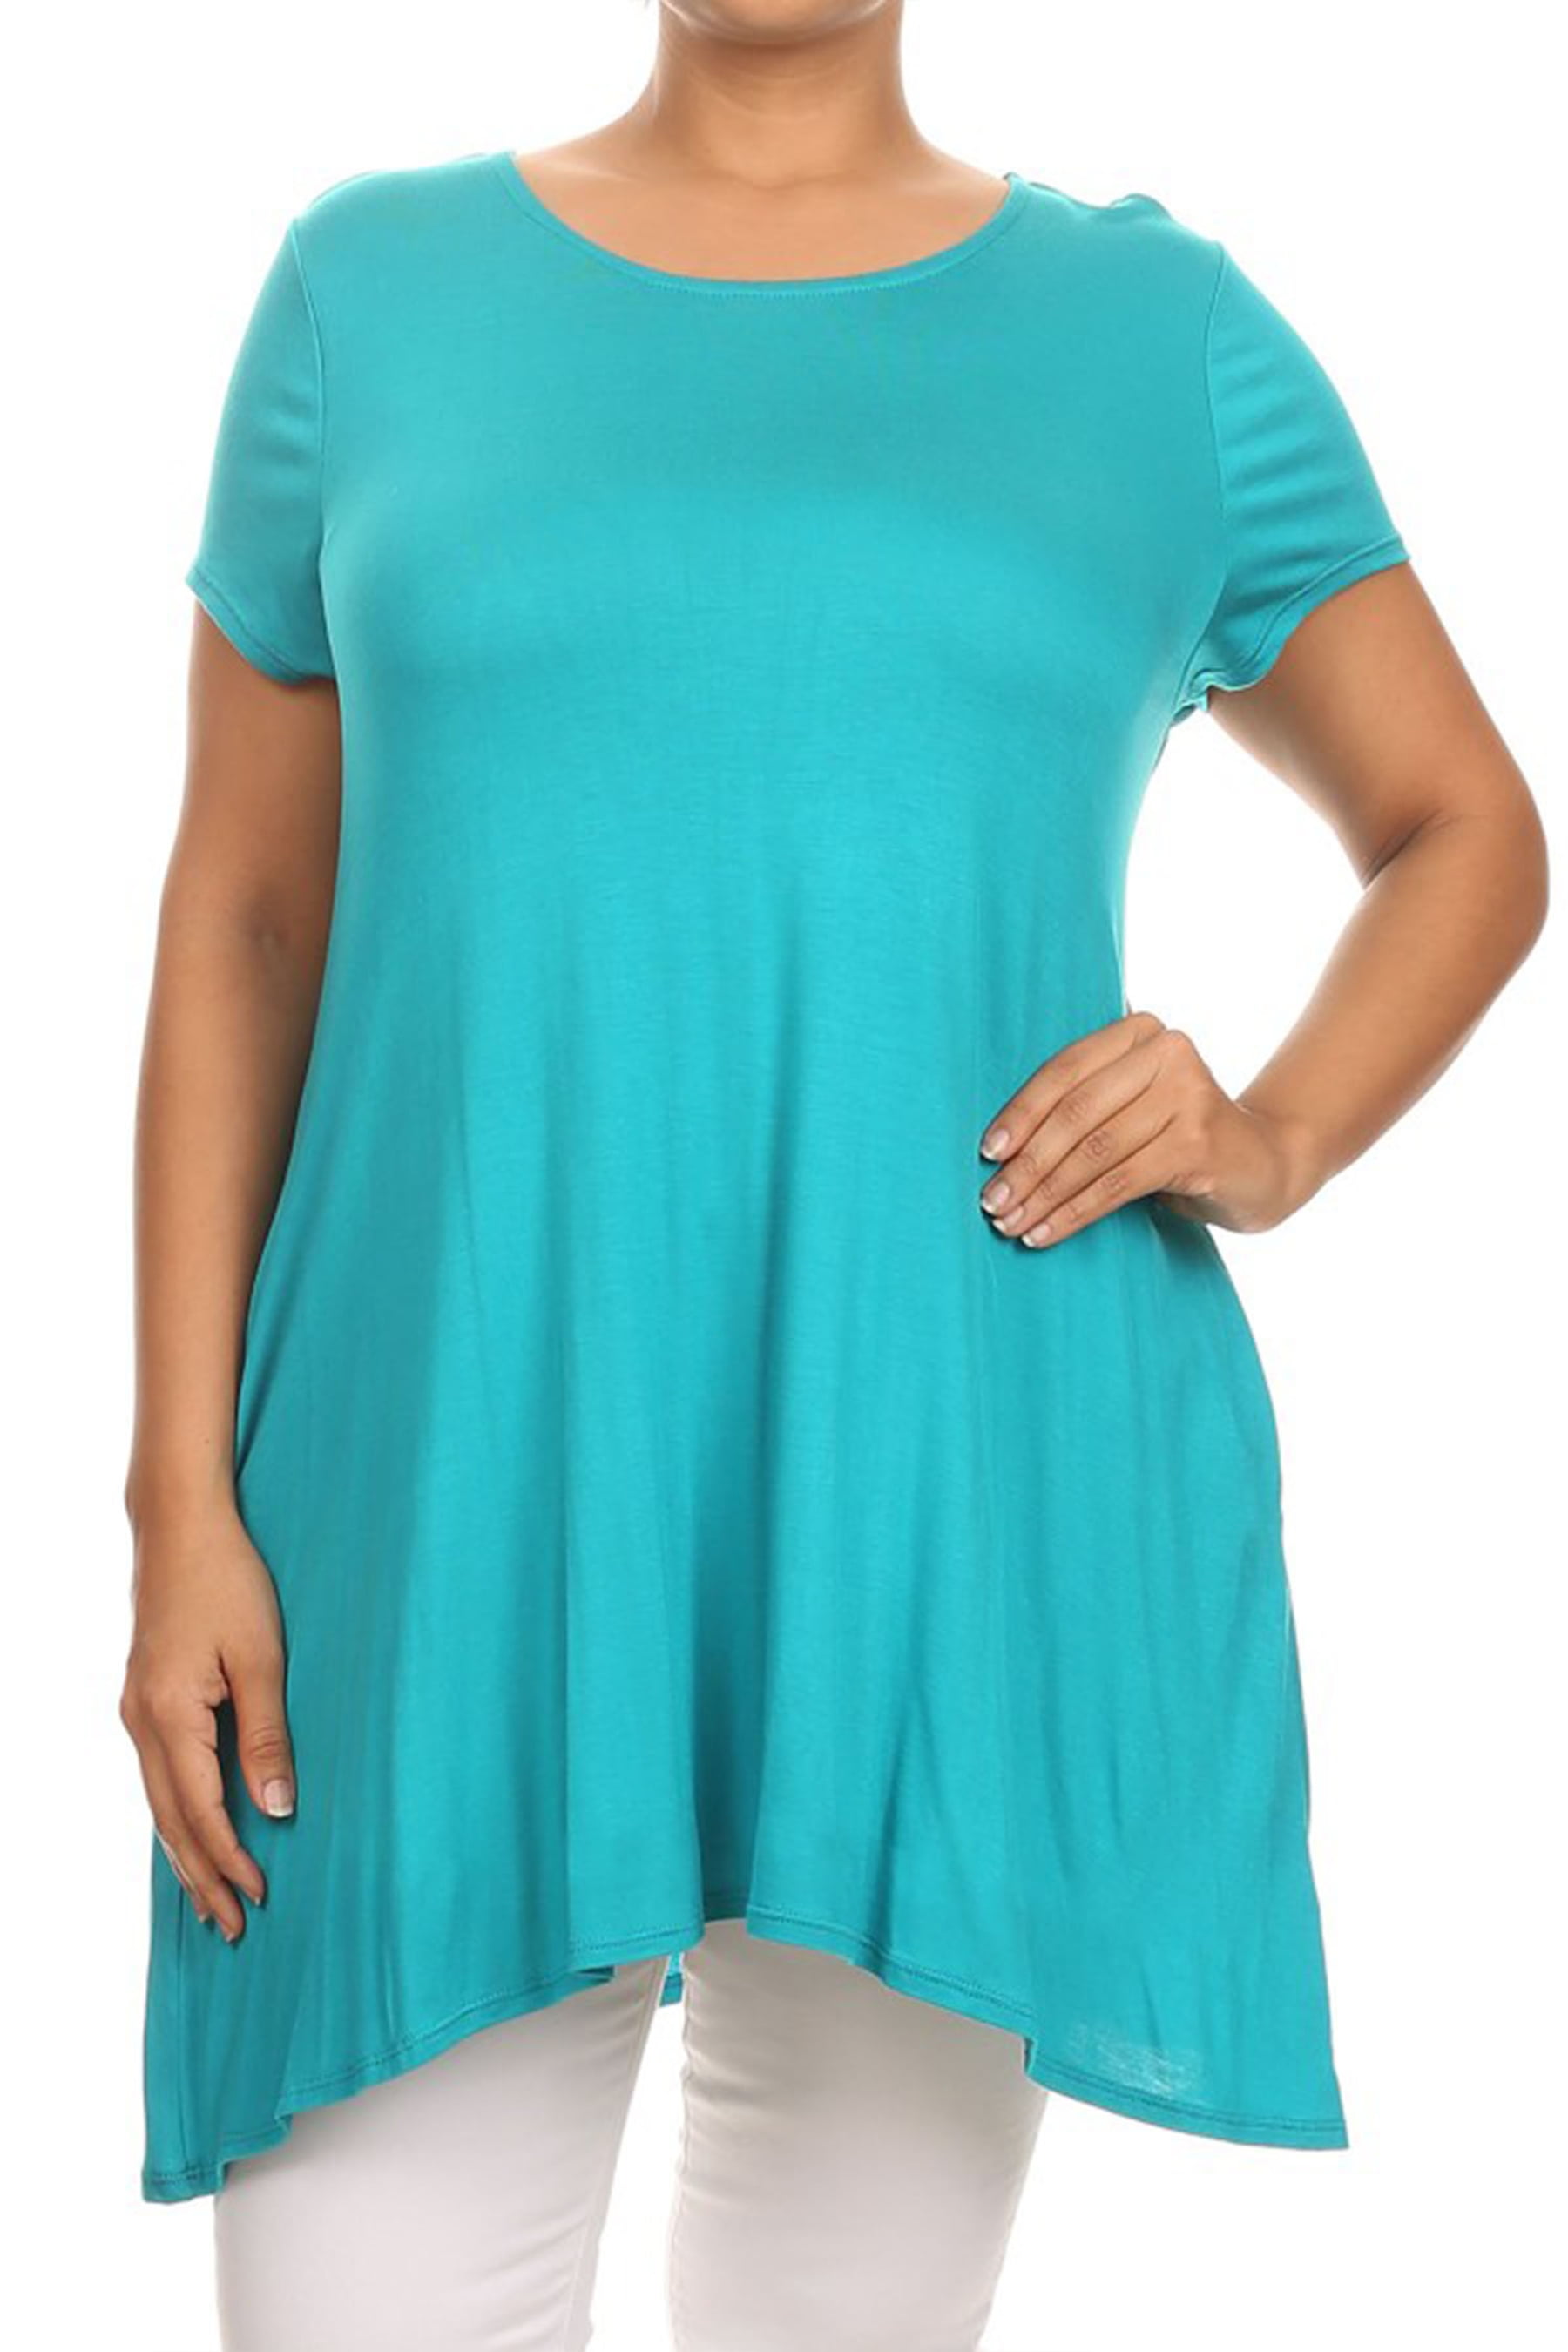 Women's Casual Plus Size Solid Color Blouse Tunic Top Shirt - Walmart.com